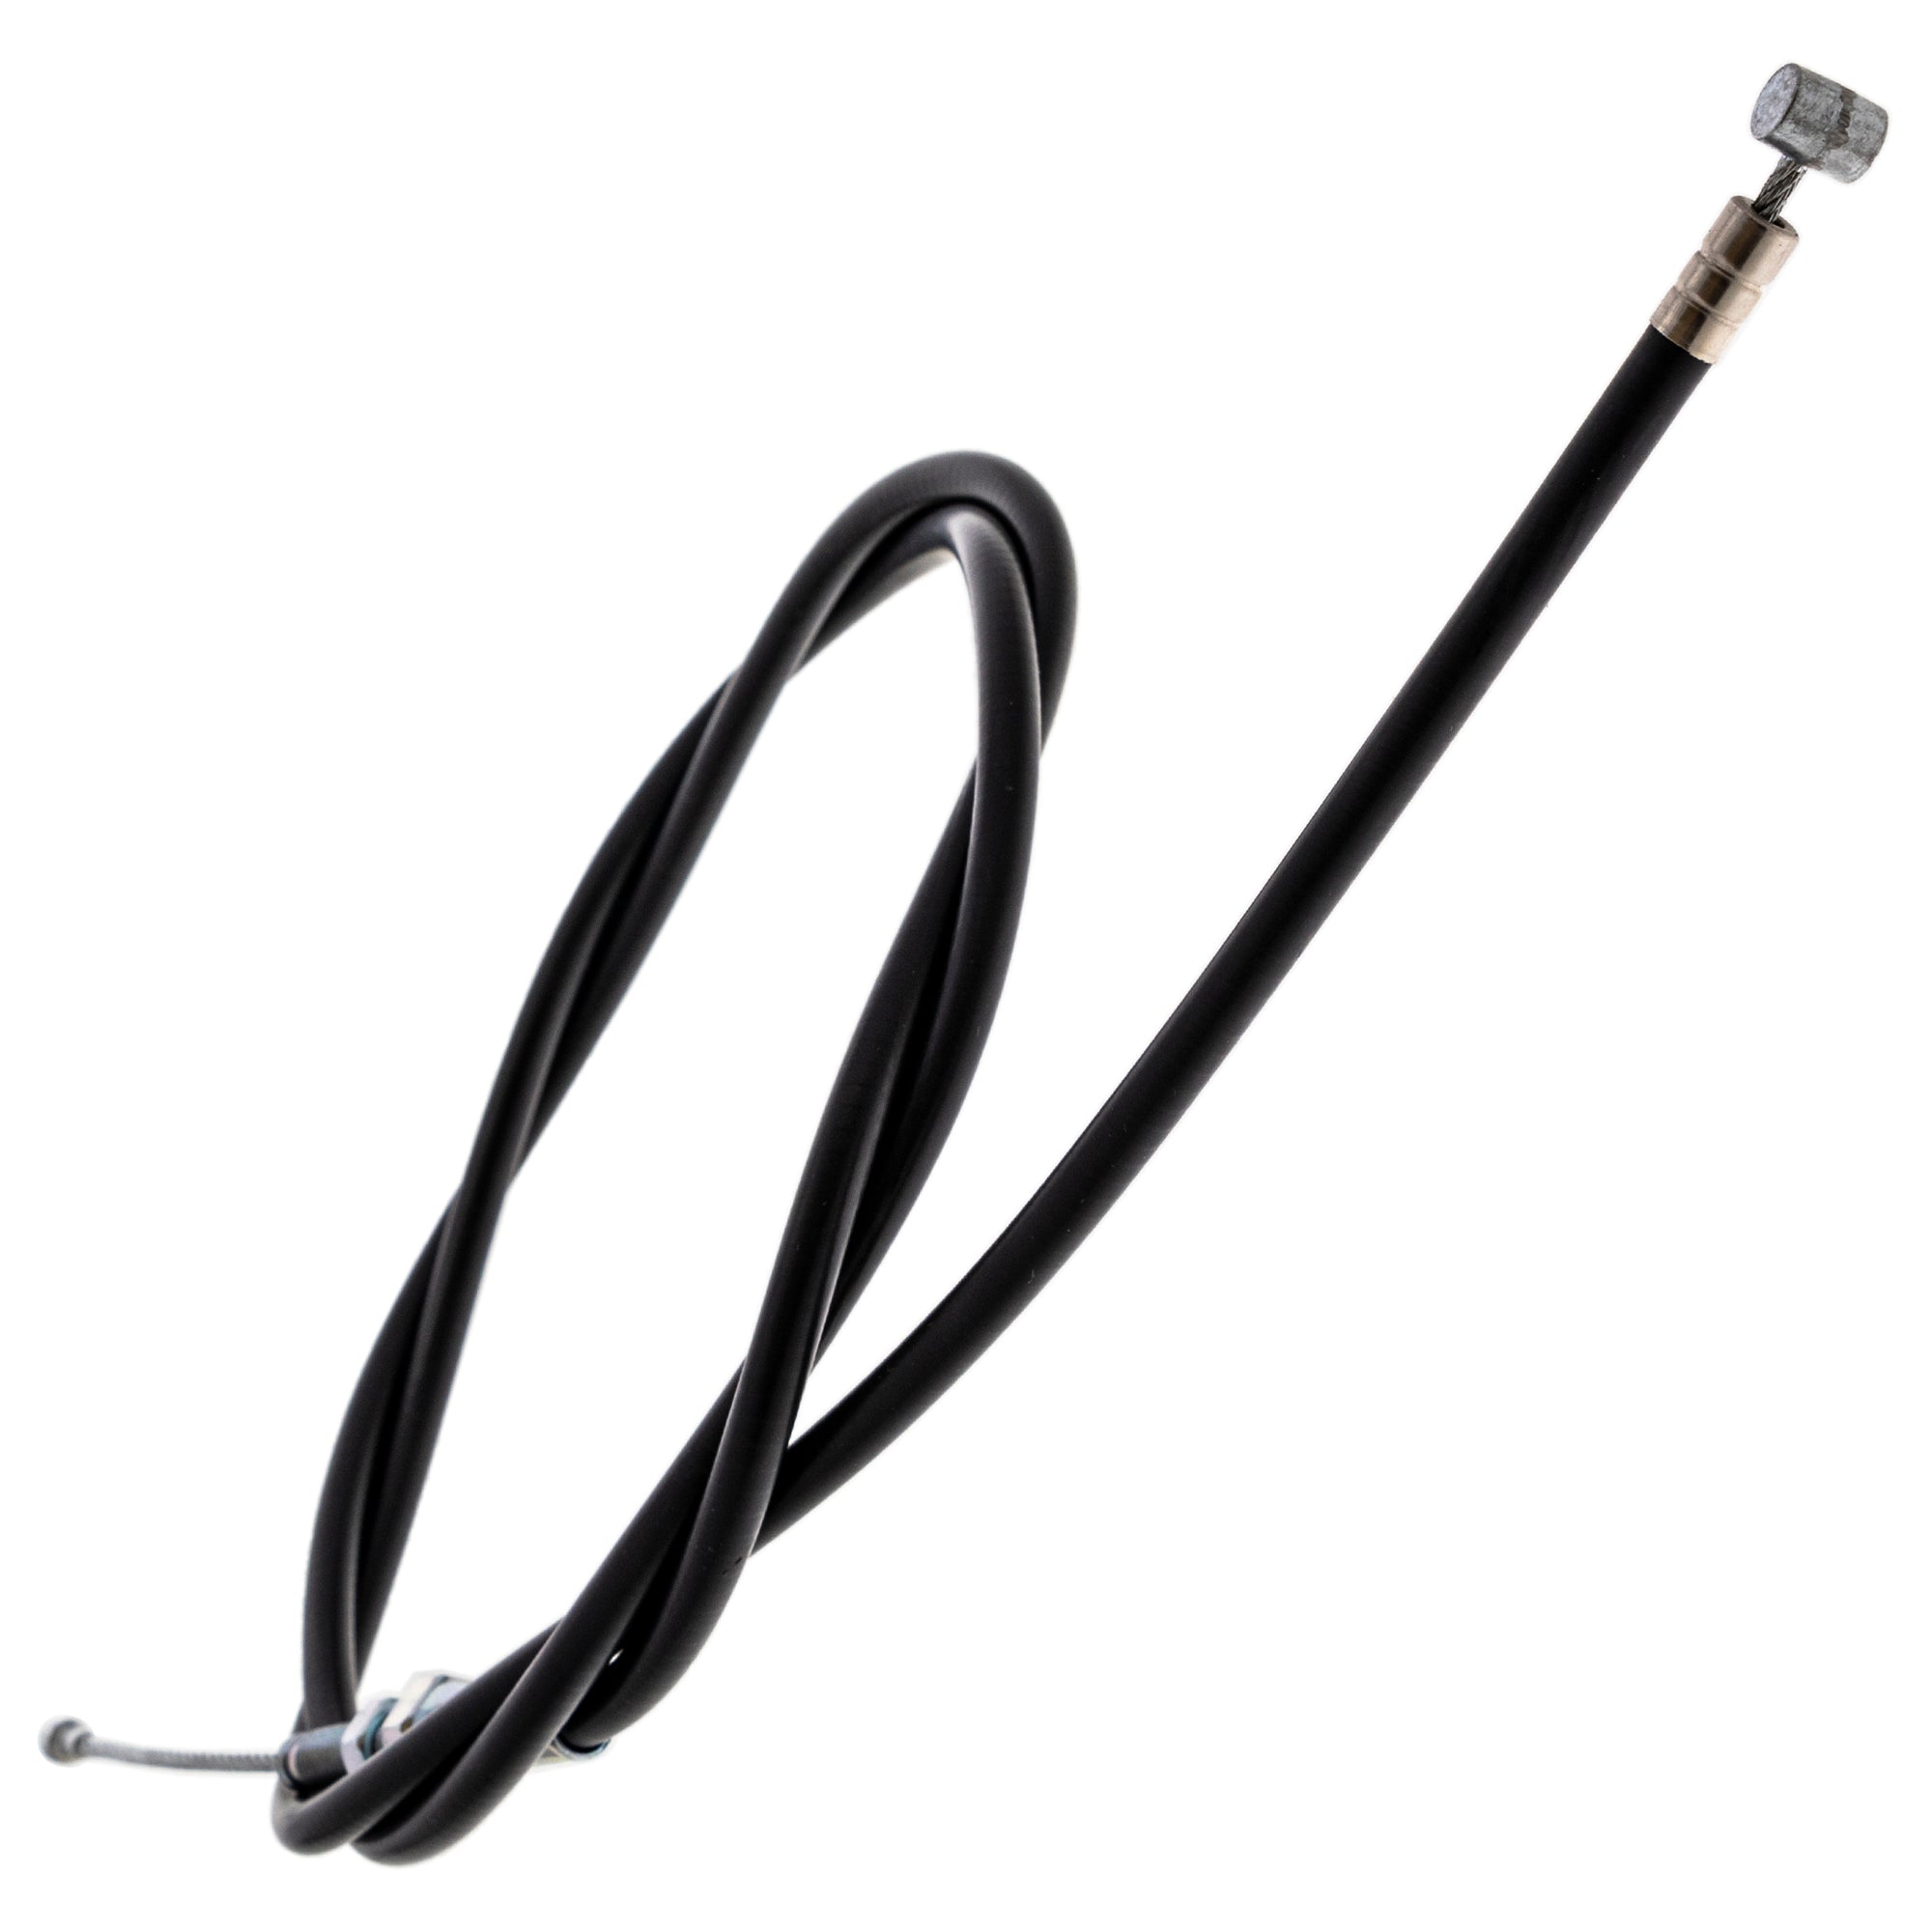 Clutch Cable for Honda Shadow Aero Spirit ACE 1100 22870-MBH-000